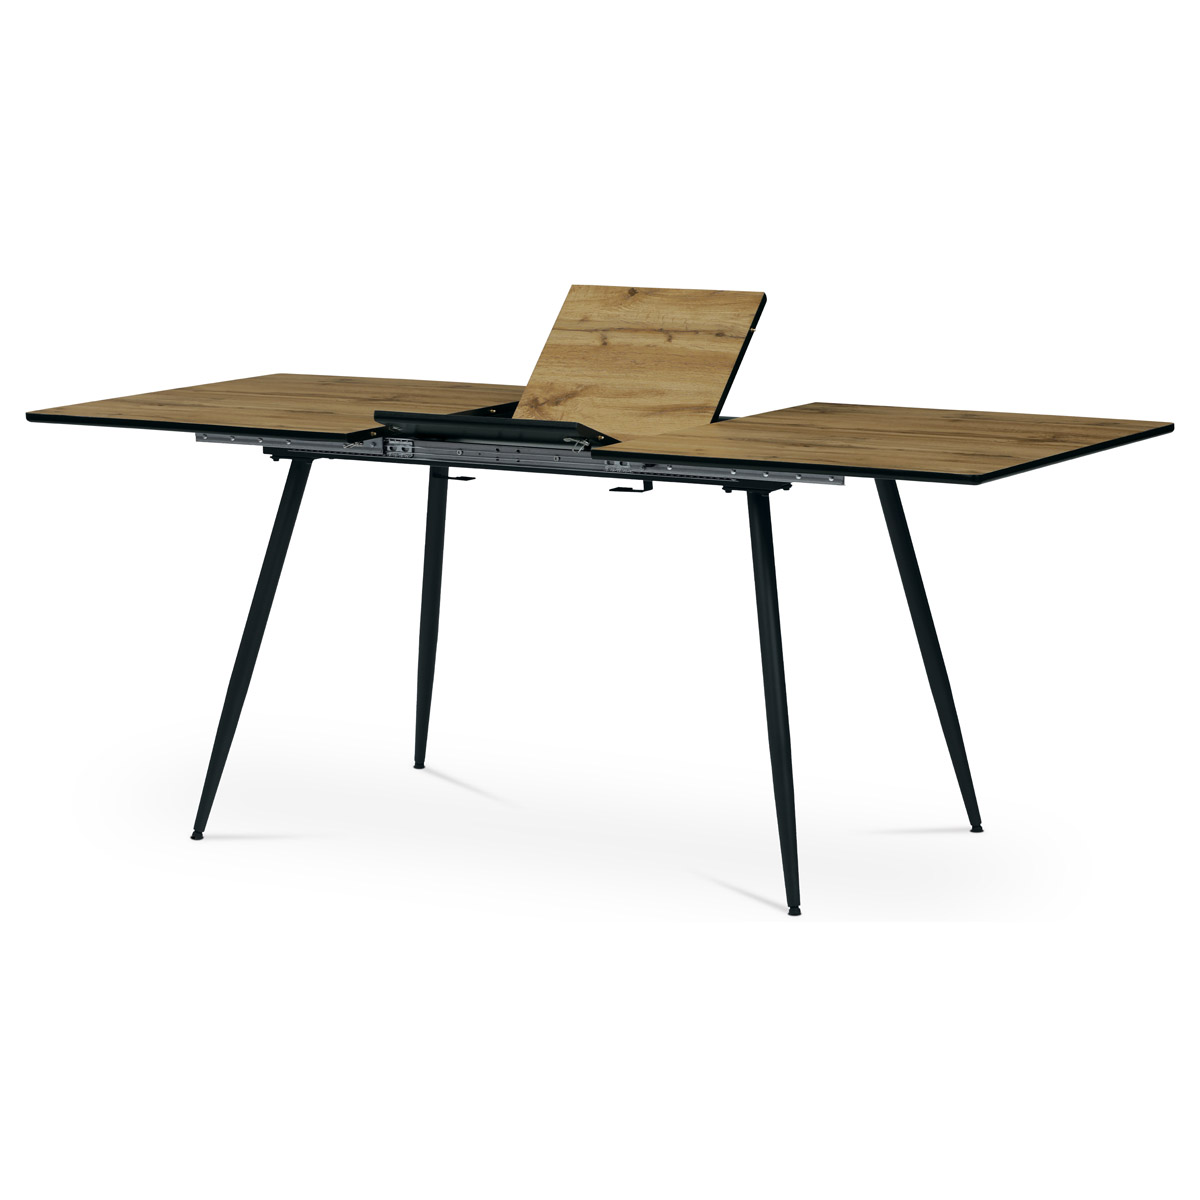 Jídelní stůl, 140+40x80x76 cm, MDF deska, dýha divoký dub, kov, černý lak